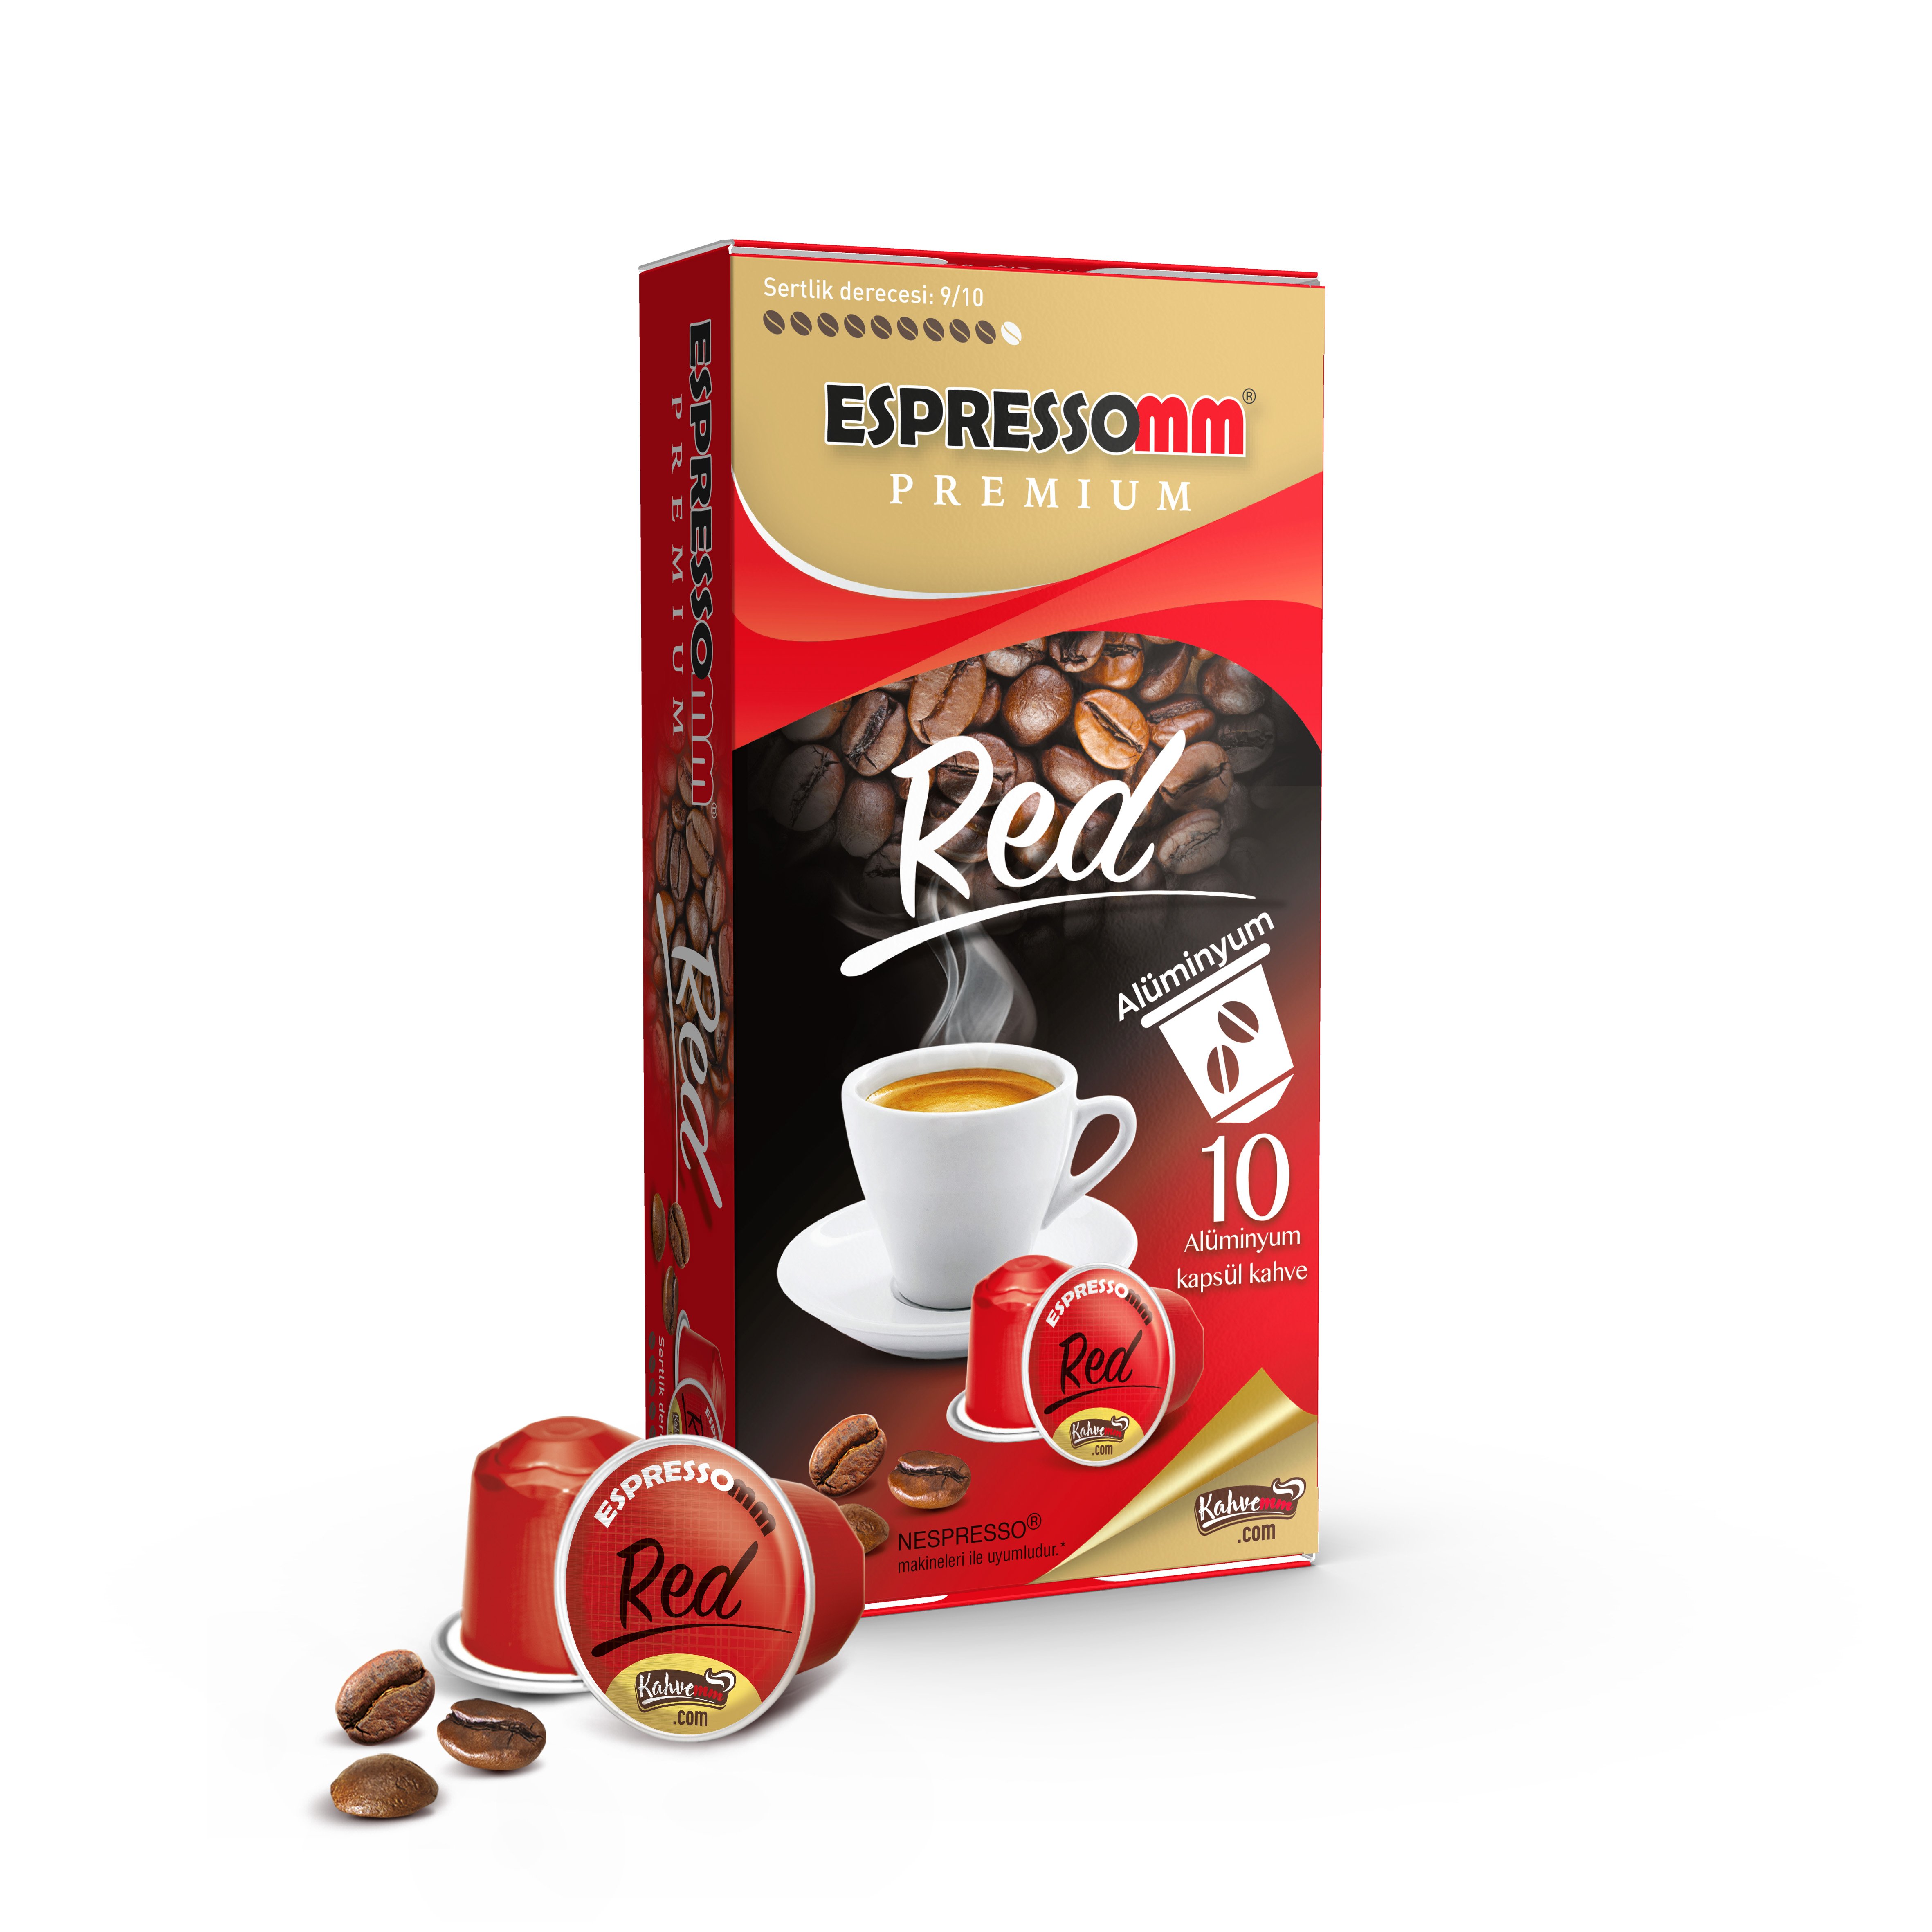 Espressomm® Premium Red Alüminyum Kapsül Kahve (10 Adet) - Nespresso® Uyumlu*